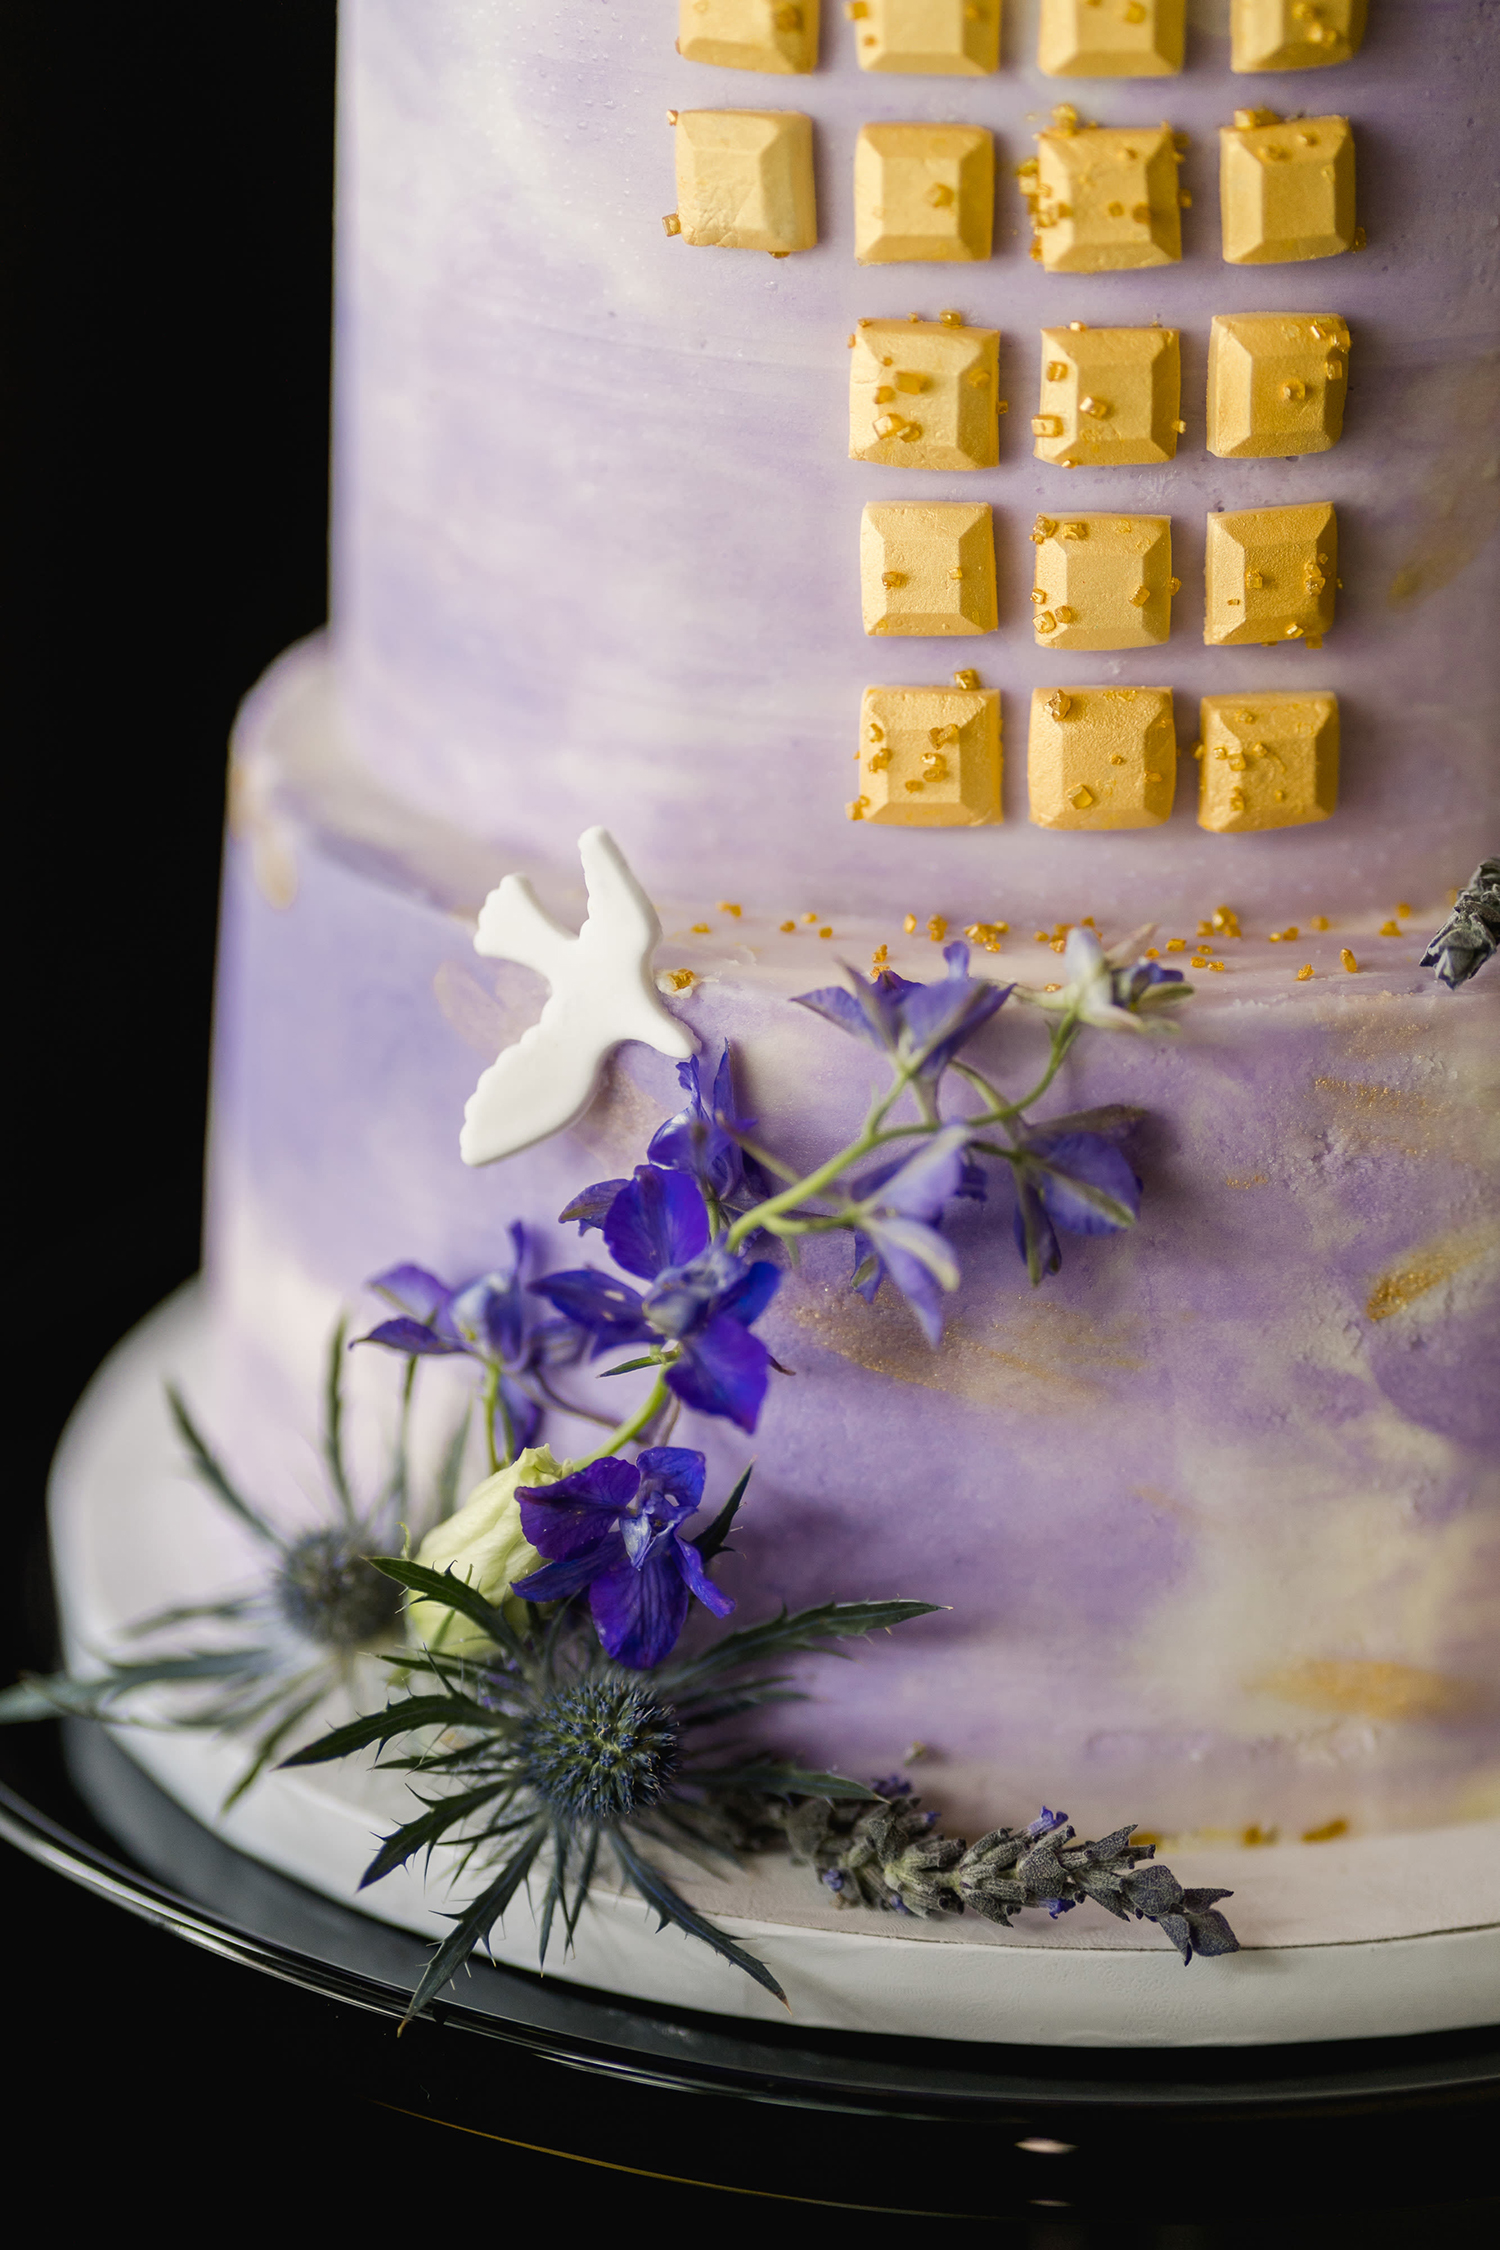 downtown sacramento lgbt wedding purple wedding cake inspiration